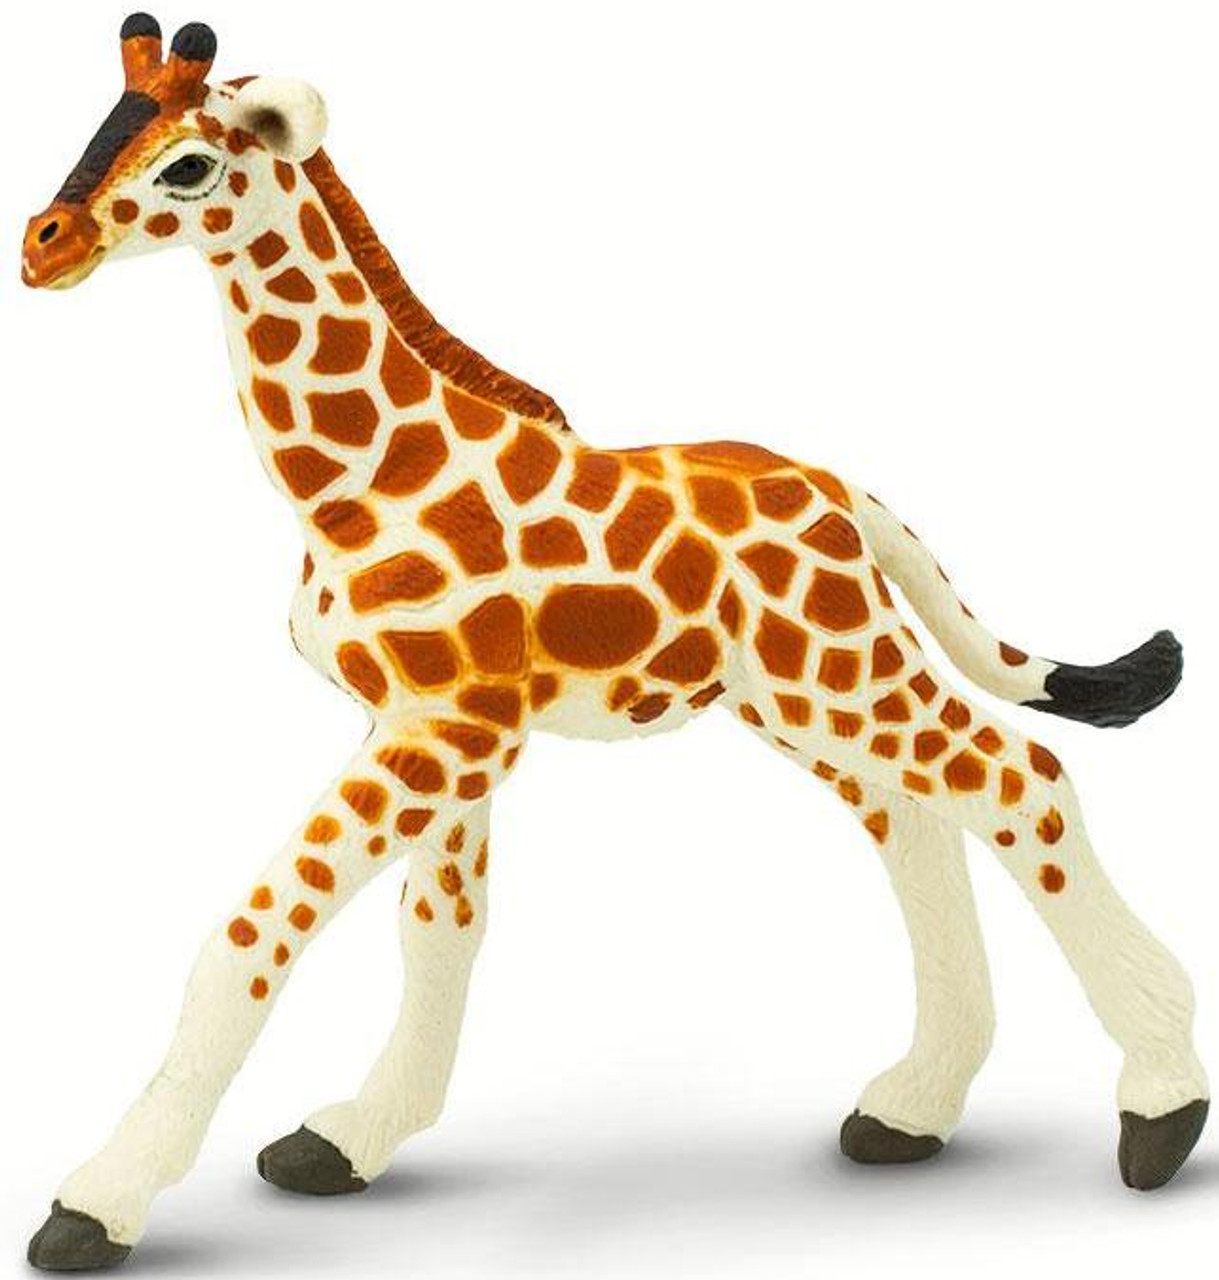 CollectA Wildlife - Reticulated Giraffe Calf #88535